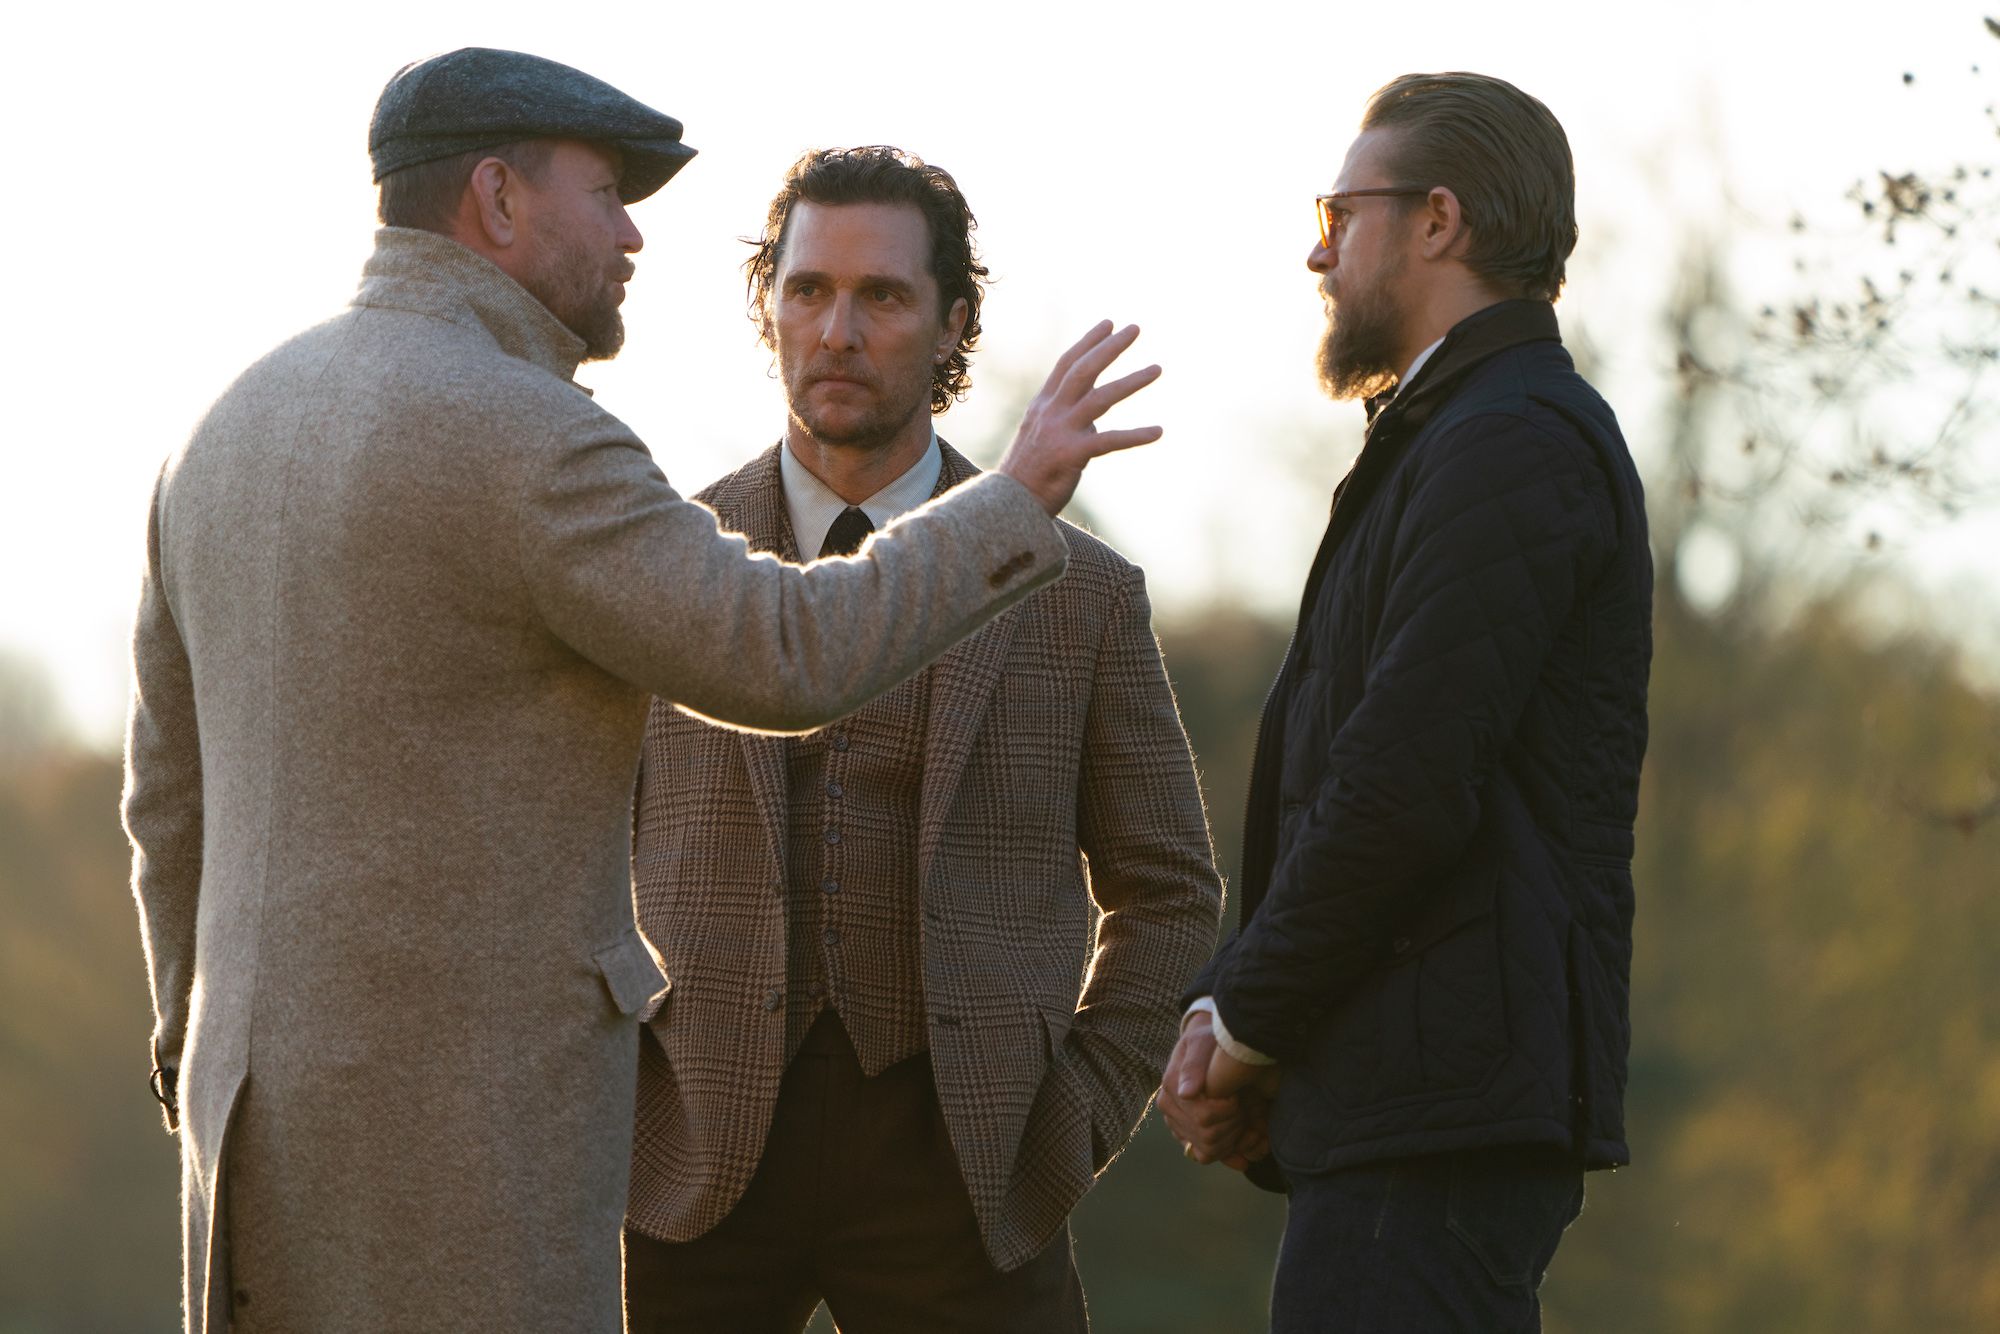 The Gentlemen Movie Trailer Reveals Guy Ritchie's New Film | Collider